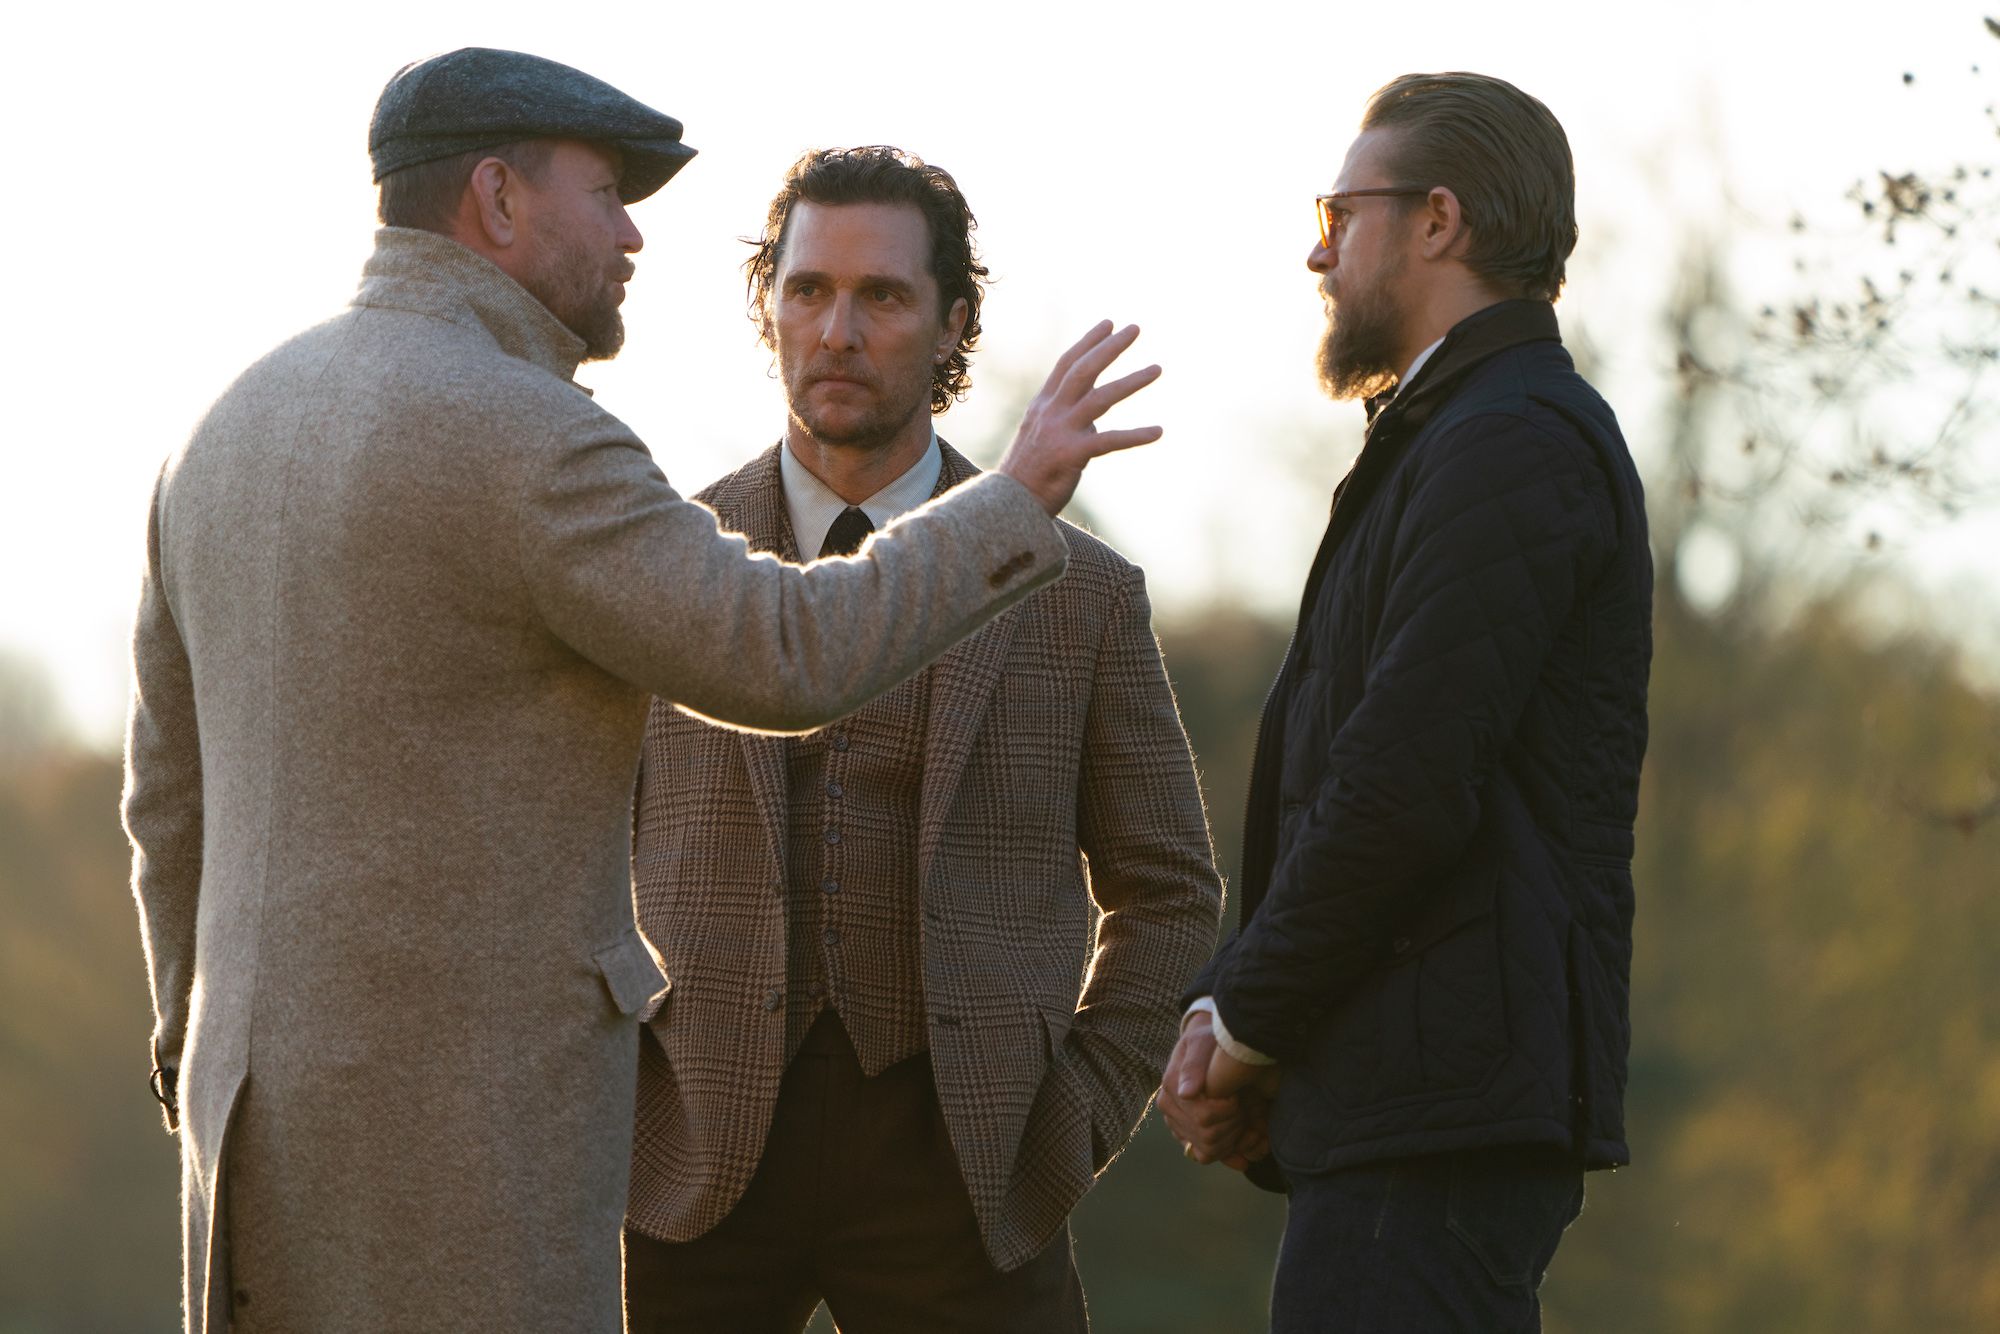 The Gentlemen Movie Trailer Reveals Guy Ritchie's New Film | Collider